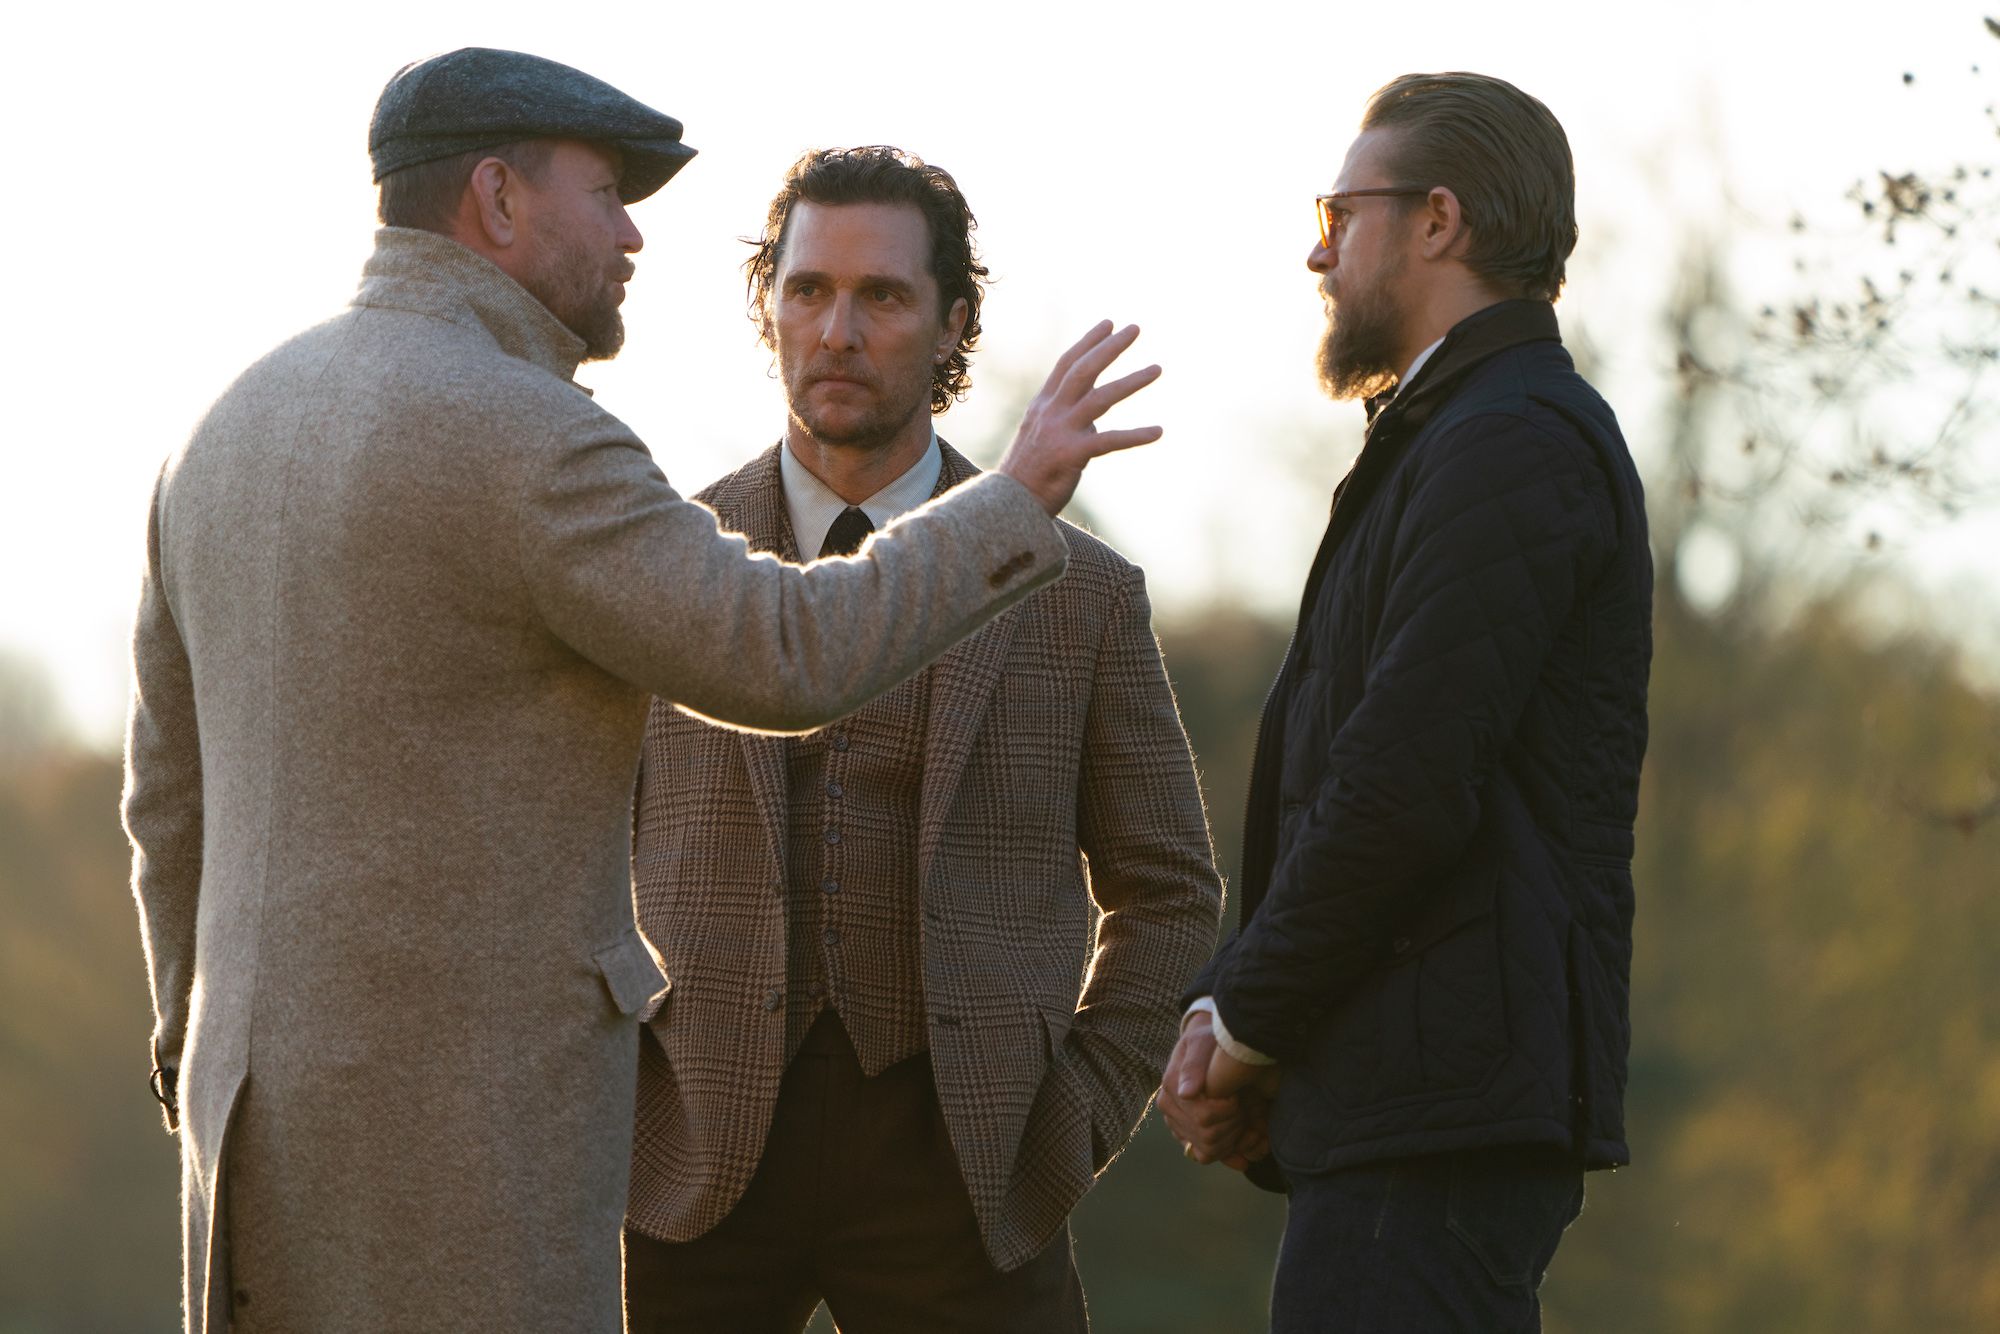 The Gentlemen Movie Trailer Reveals Guy Ritchie's New Film | Collider